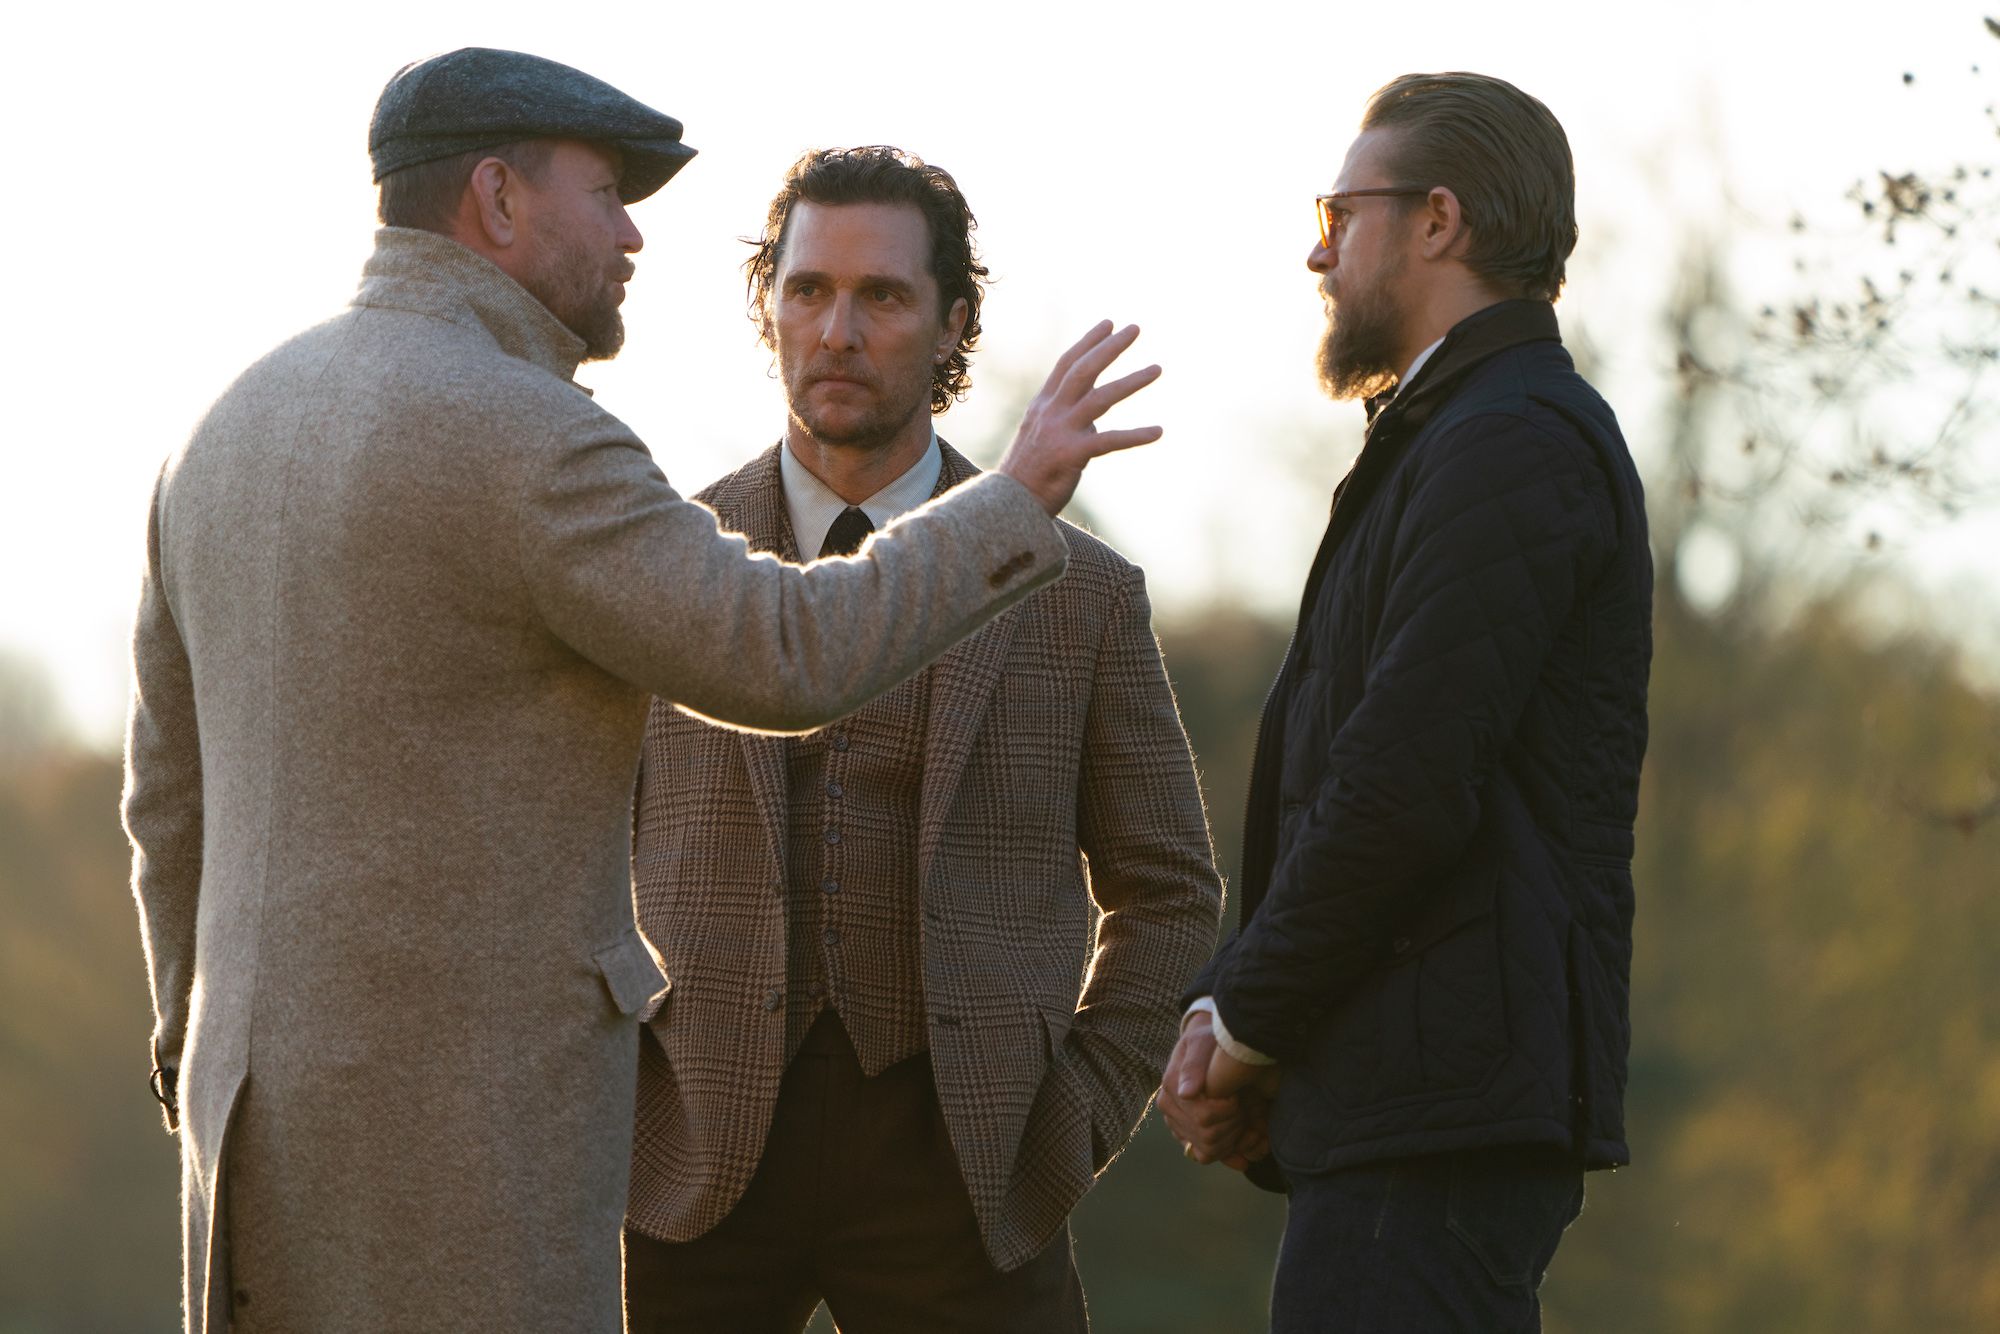 The Gentlemen Movie Trailer Reveals Guy Ritchie's New Film | Collider